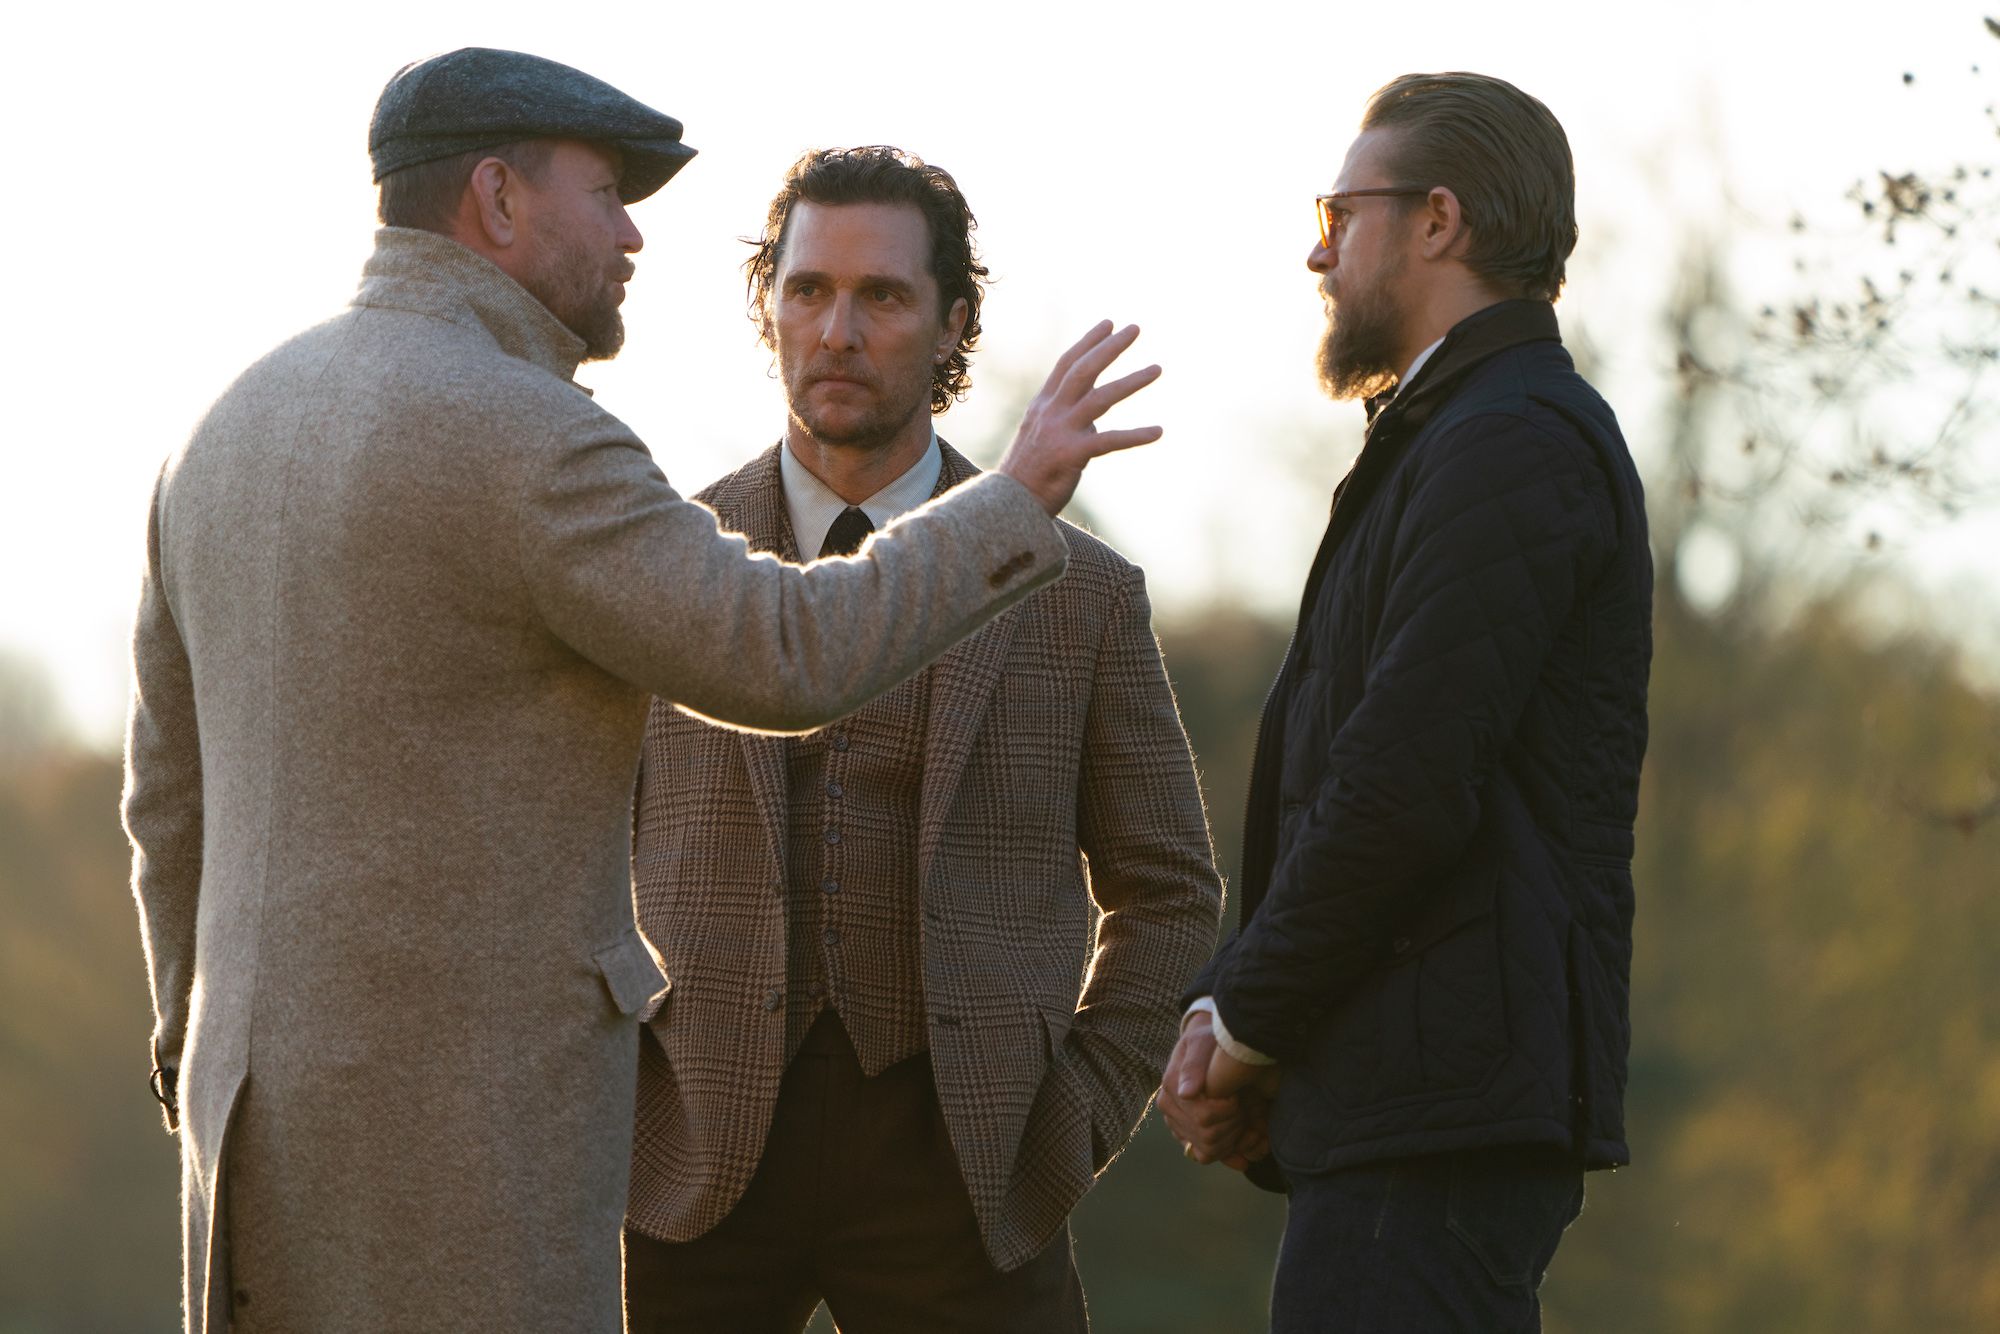 The Gentlemen Movie Trailer Reveals Guy Ritchie's New Film | Collider